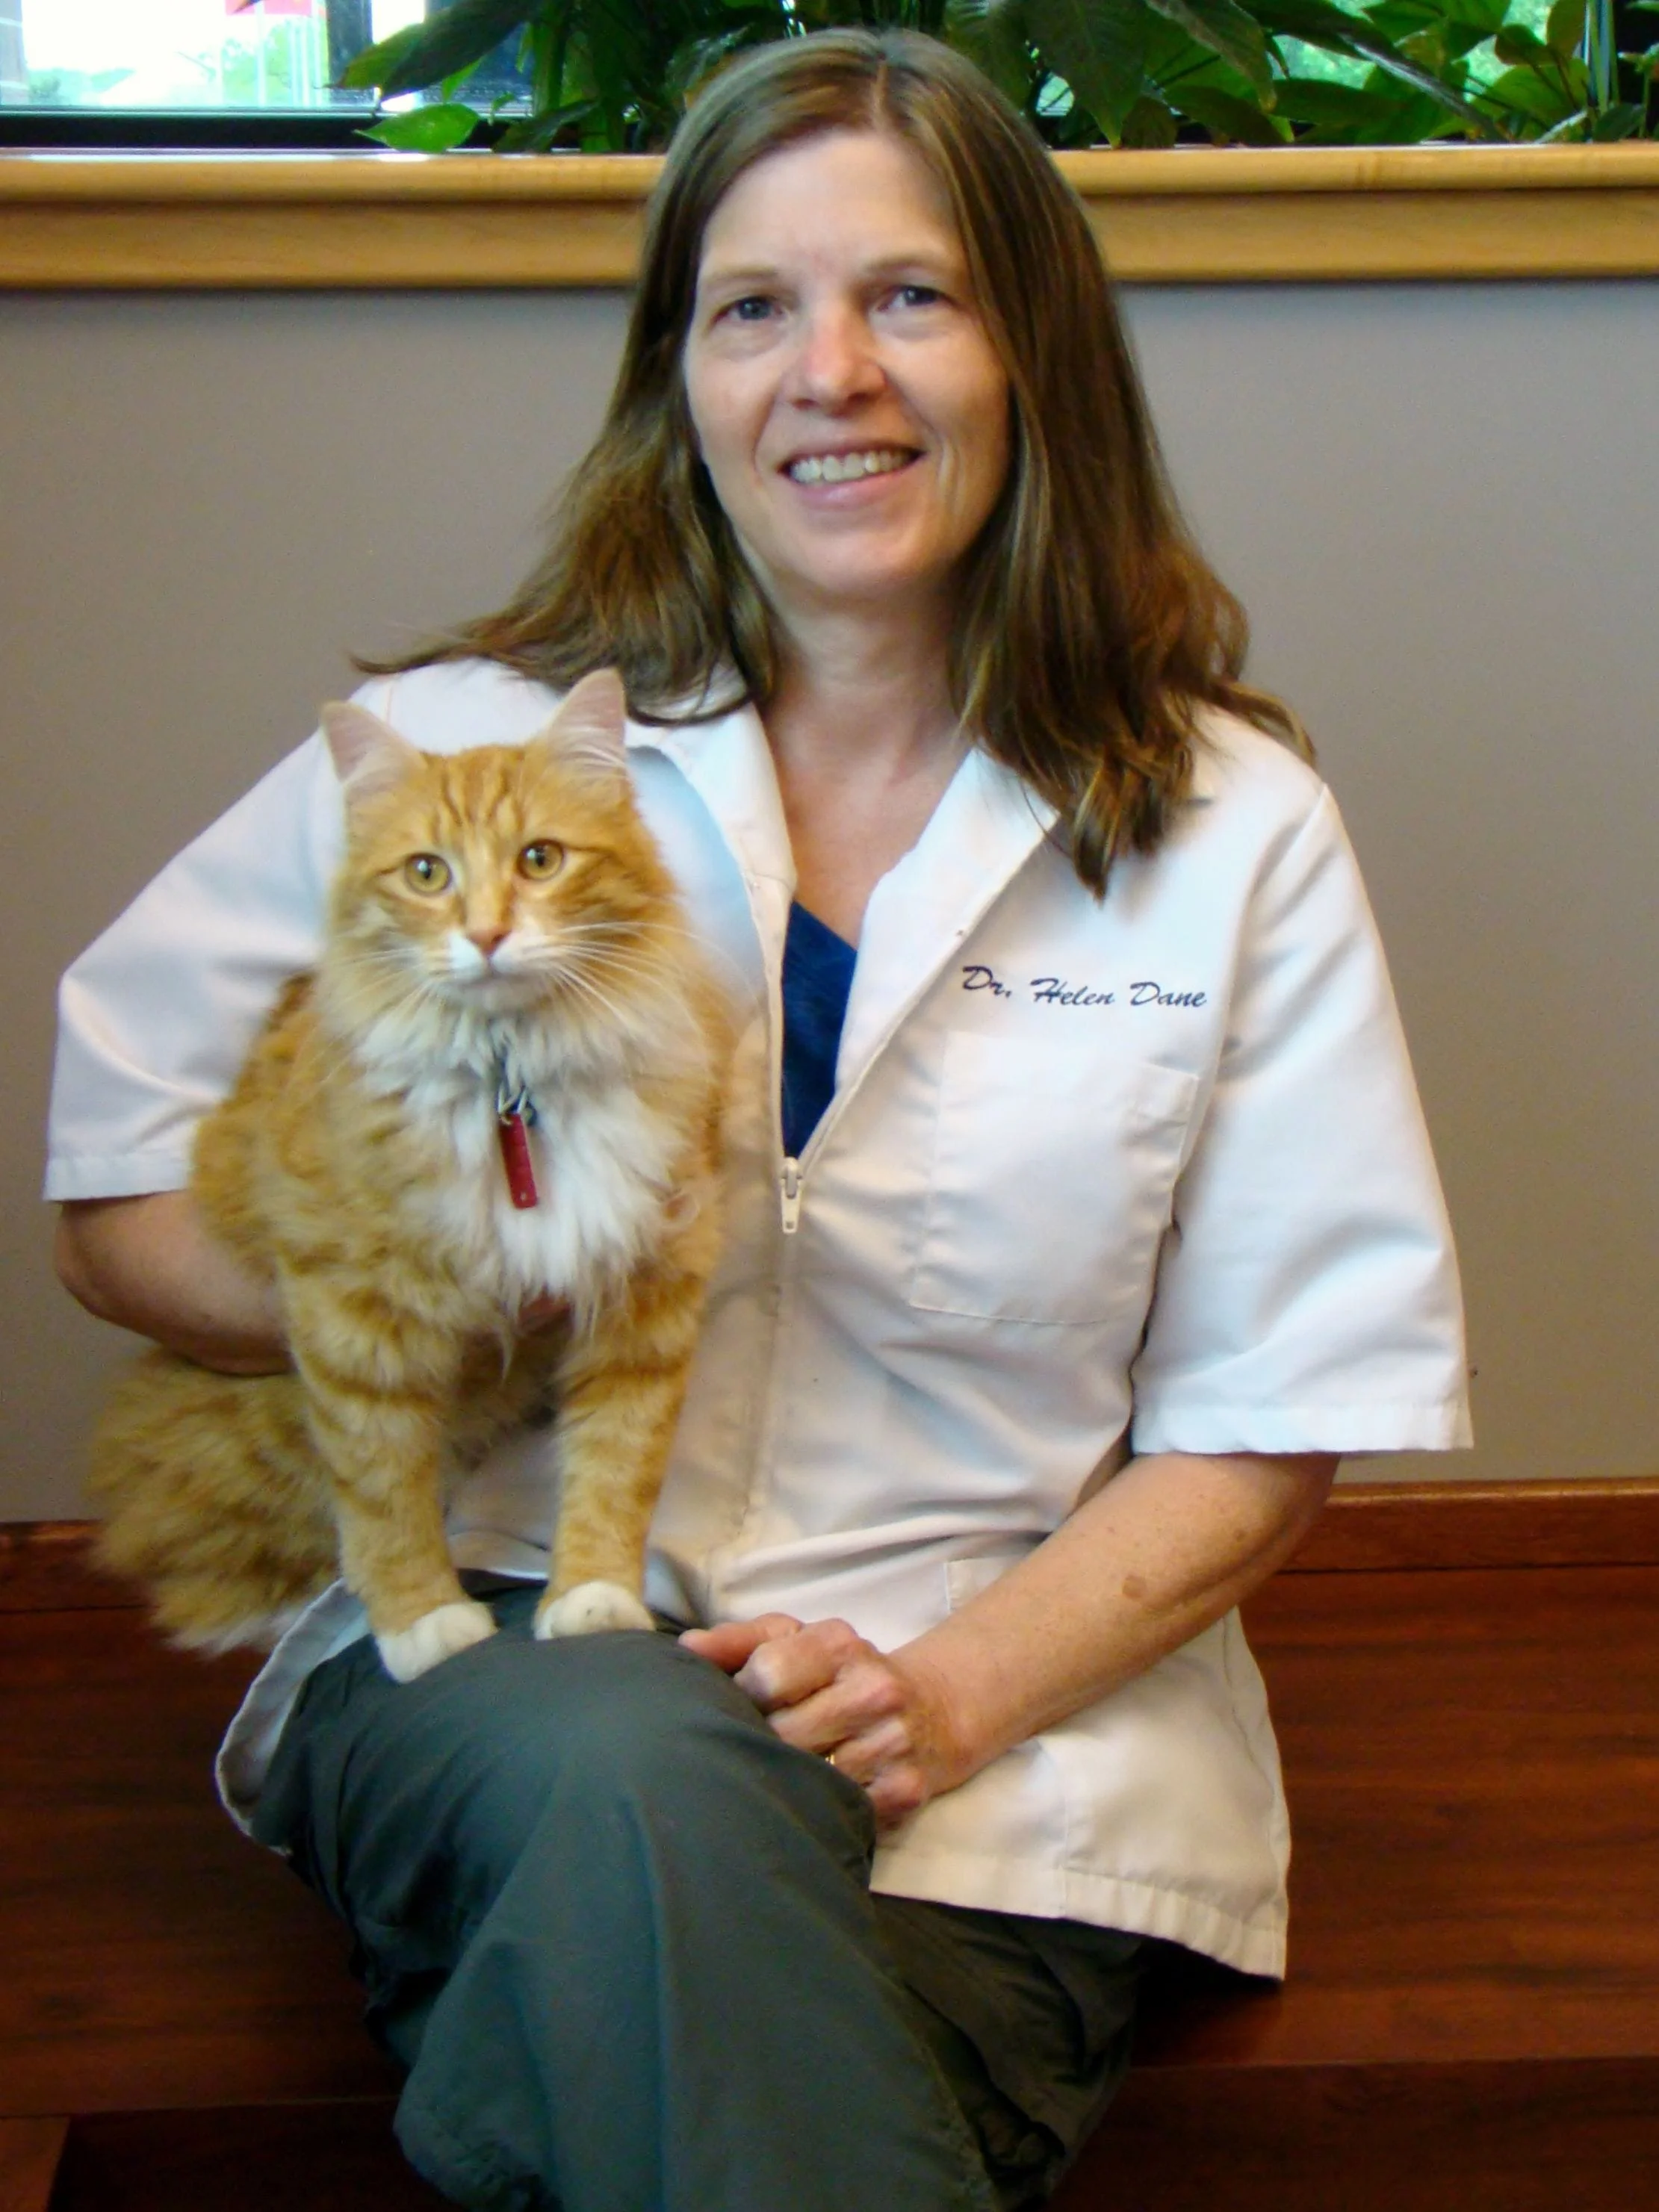 Dr. Helen Dane at Danada Veterinary Hospital in Wheaton